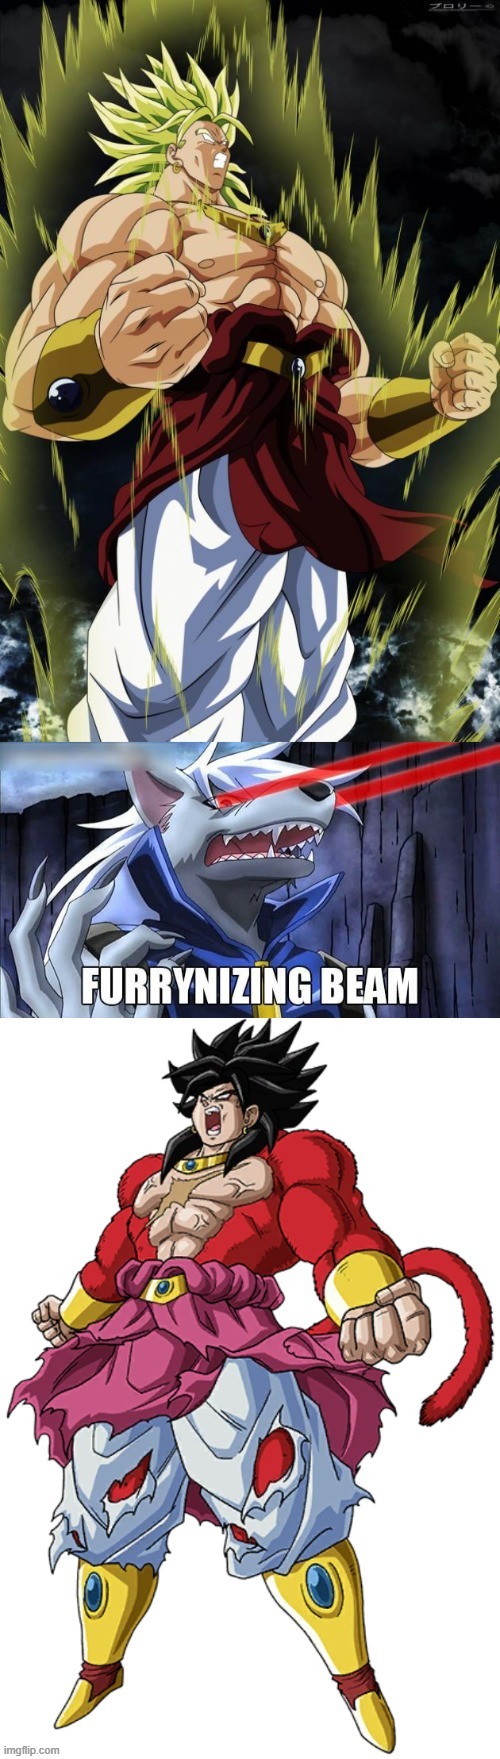 Brurry xD | image tagged in broly,furrynizing beam,dragon ball,furry,anime,manga | made w/ Imgflip meme maker